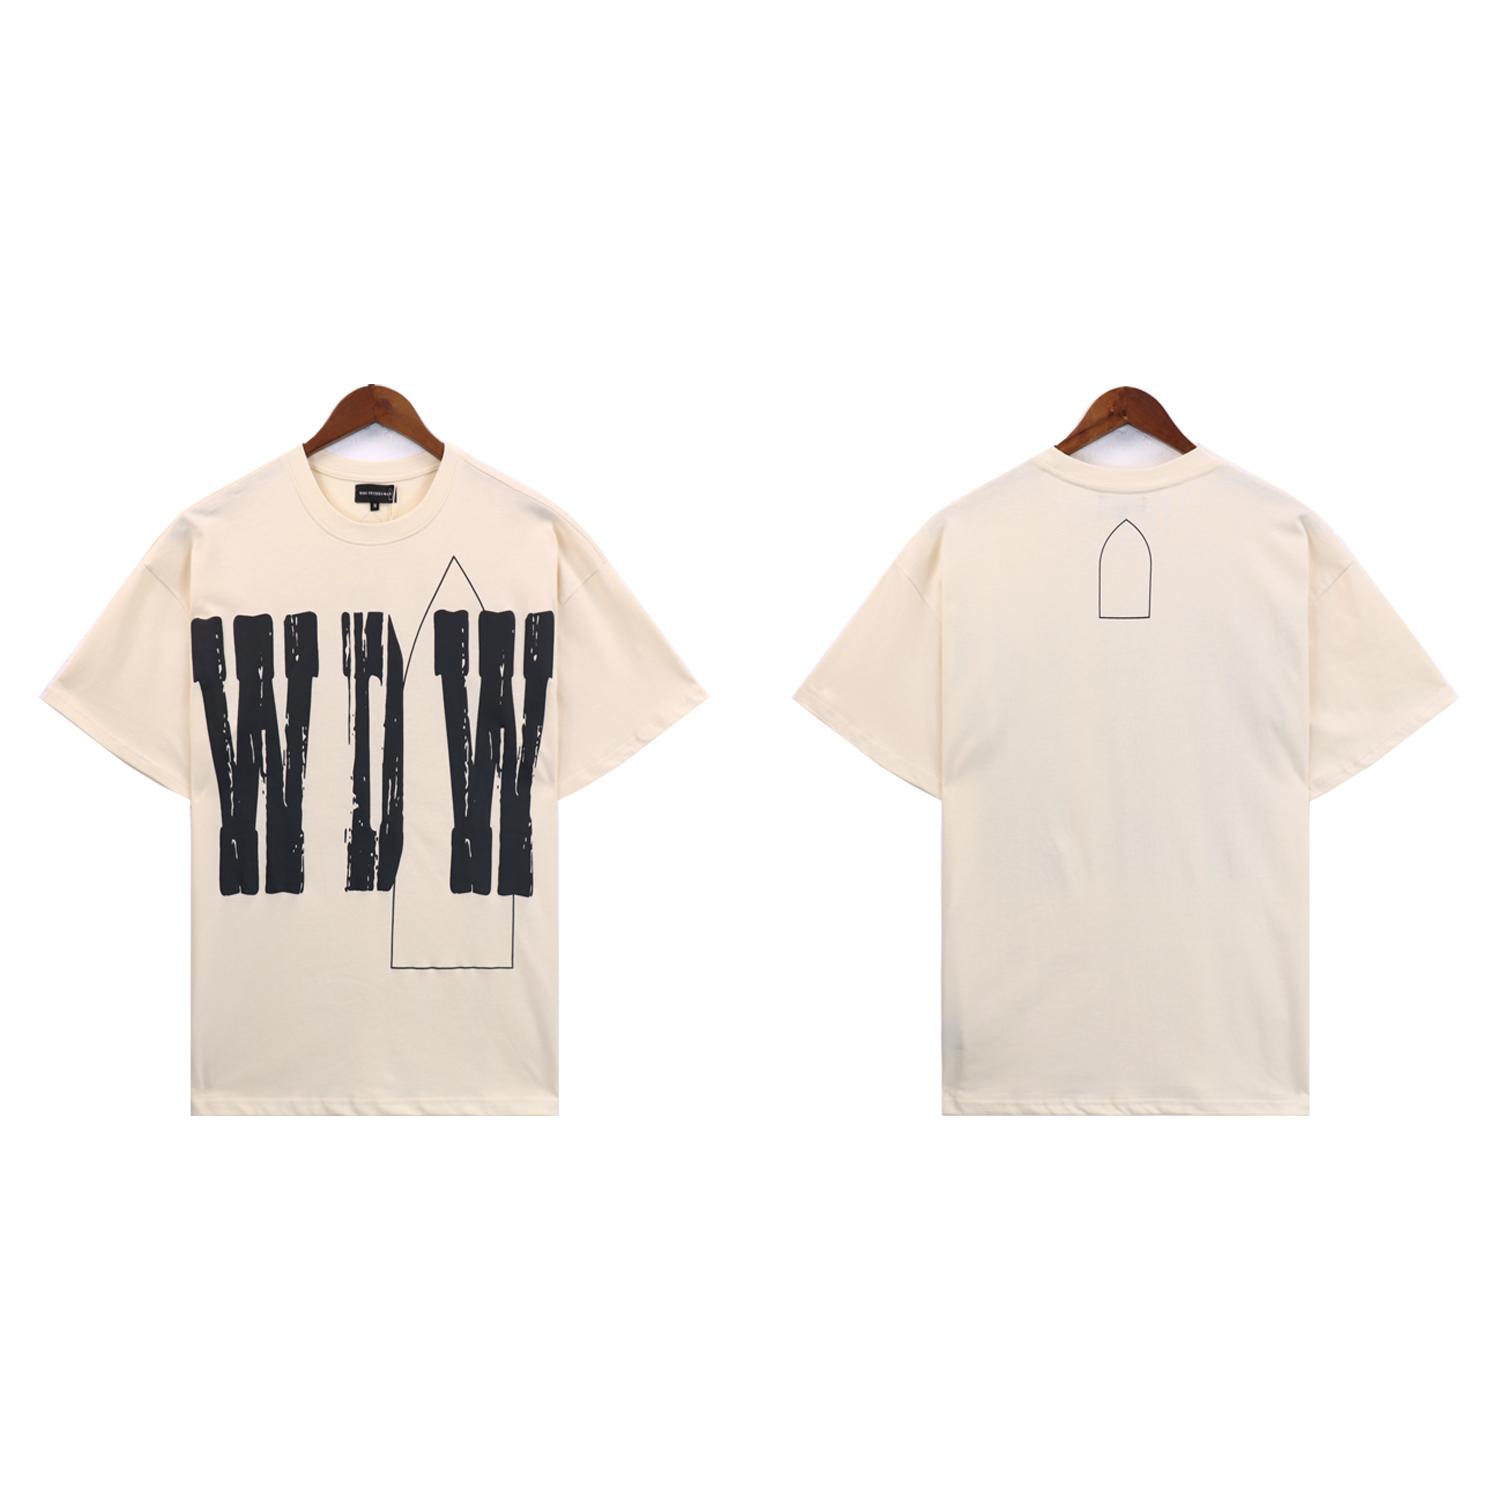 Who Decides War WDW Cotton T-shirt - everydesigner